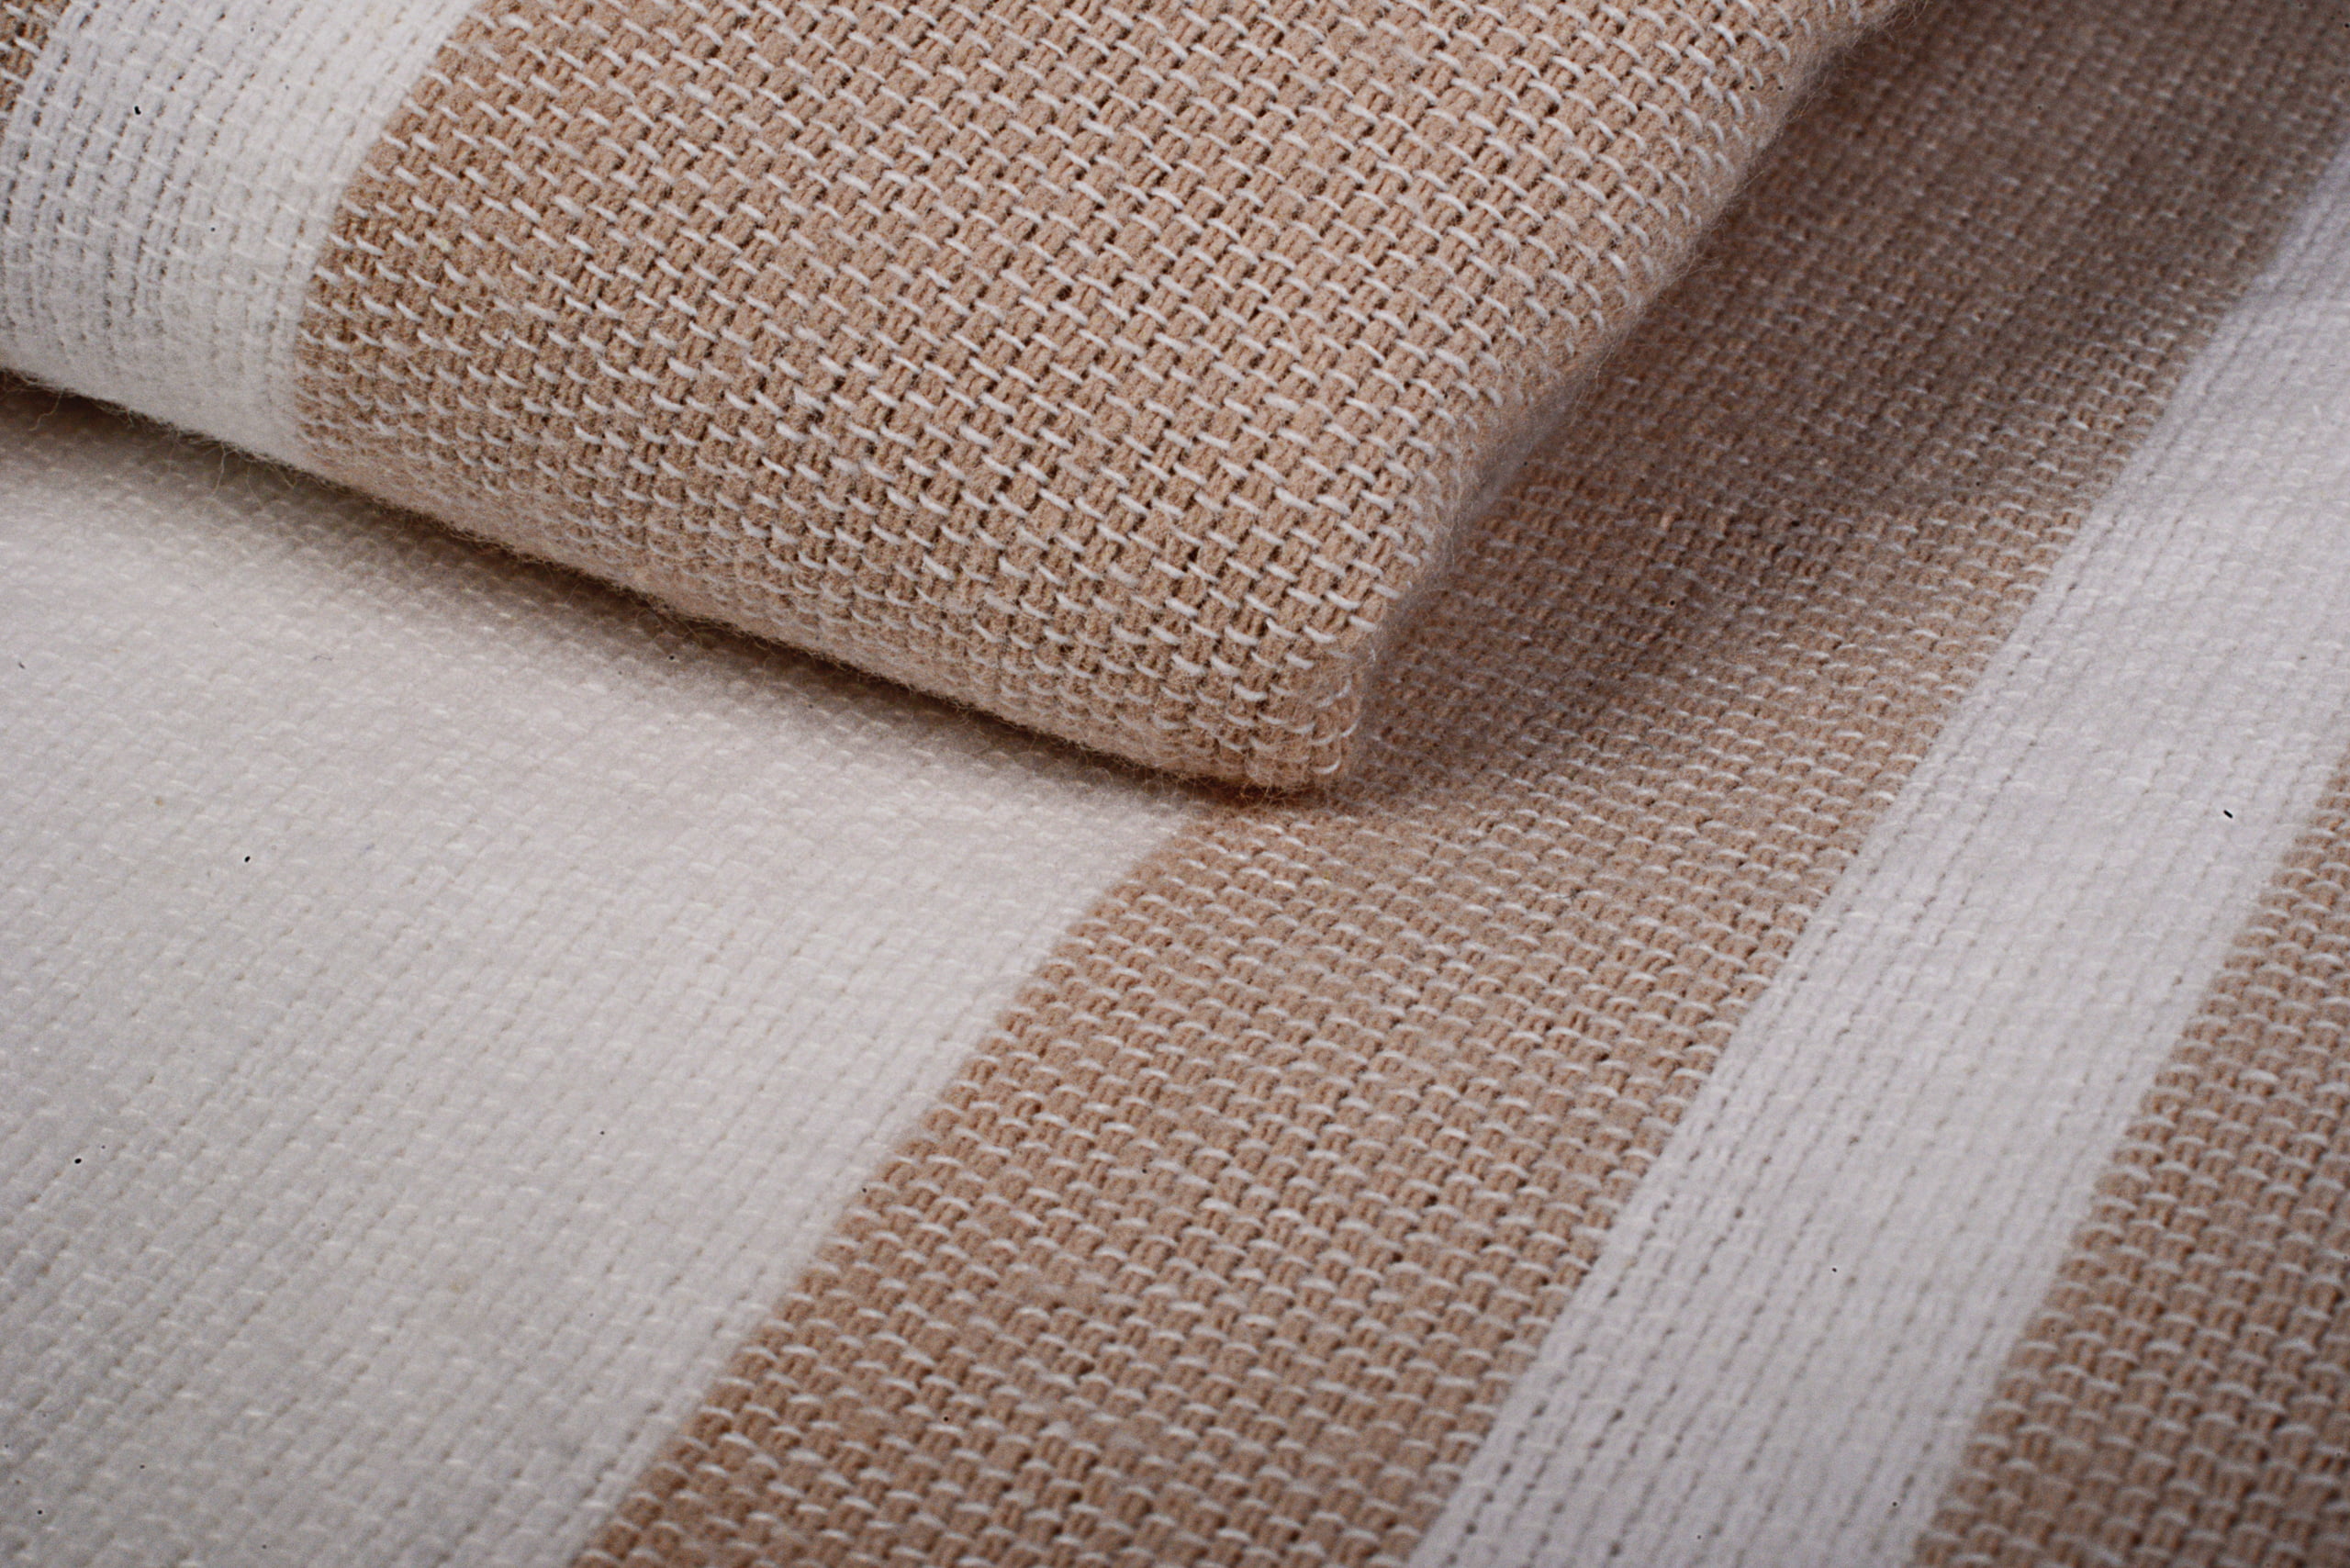 White Fabric – Hotel, Home & Hospital Textile